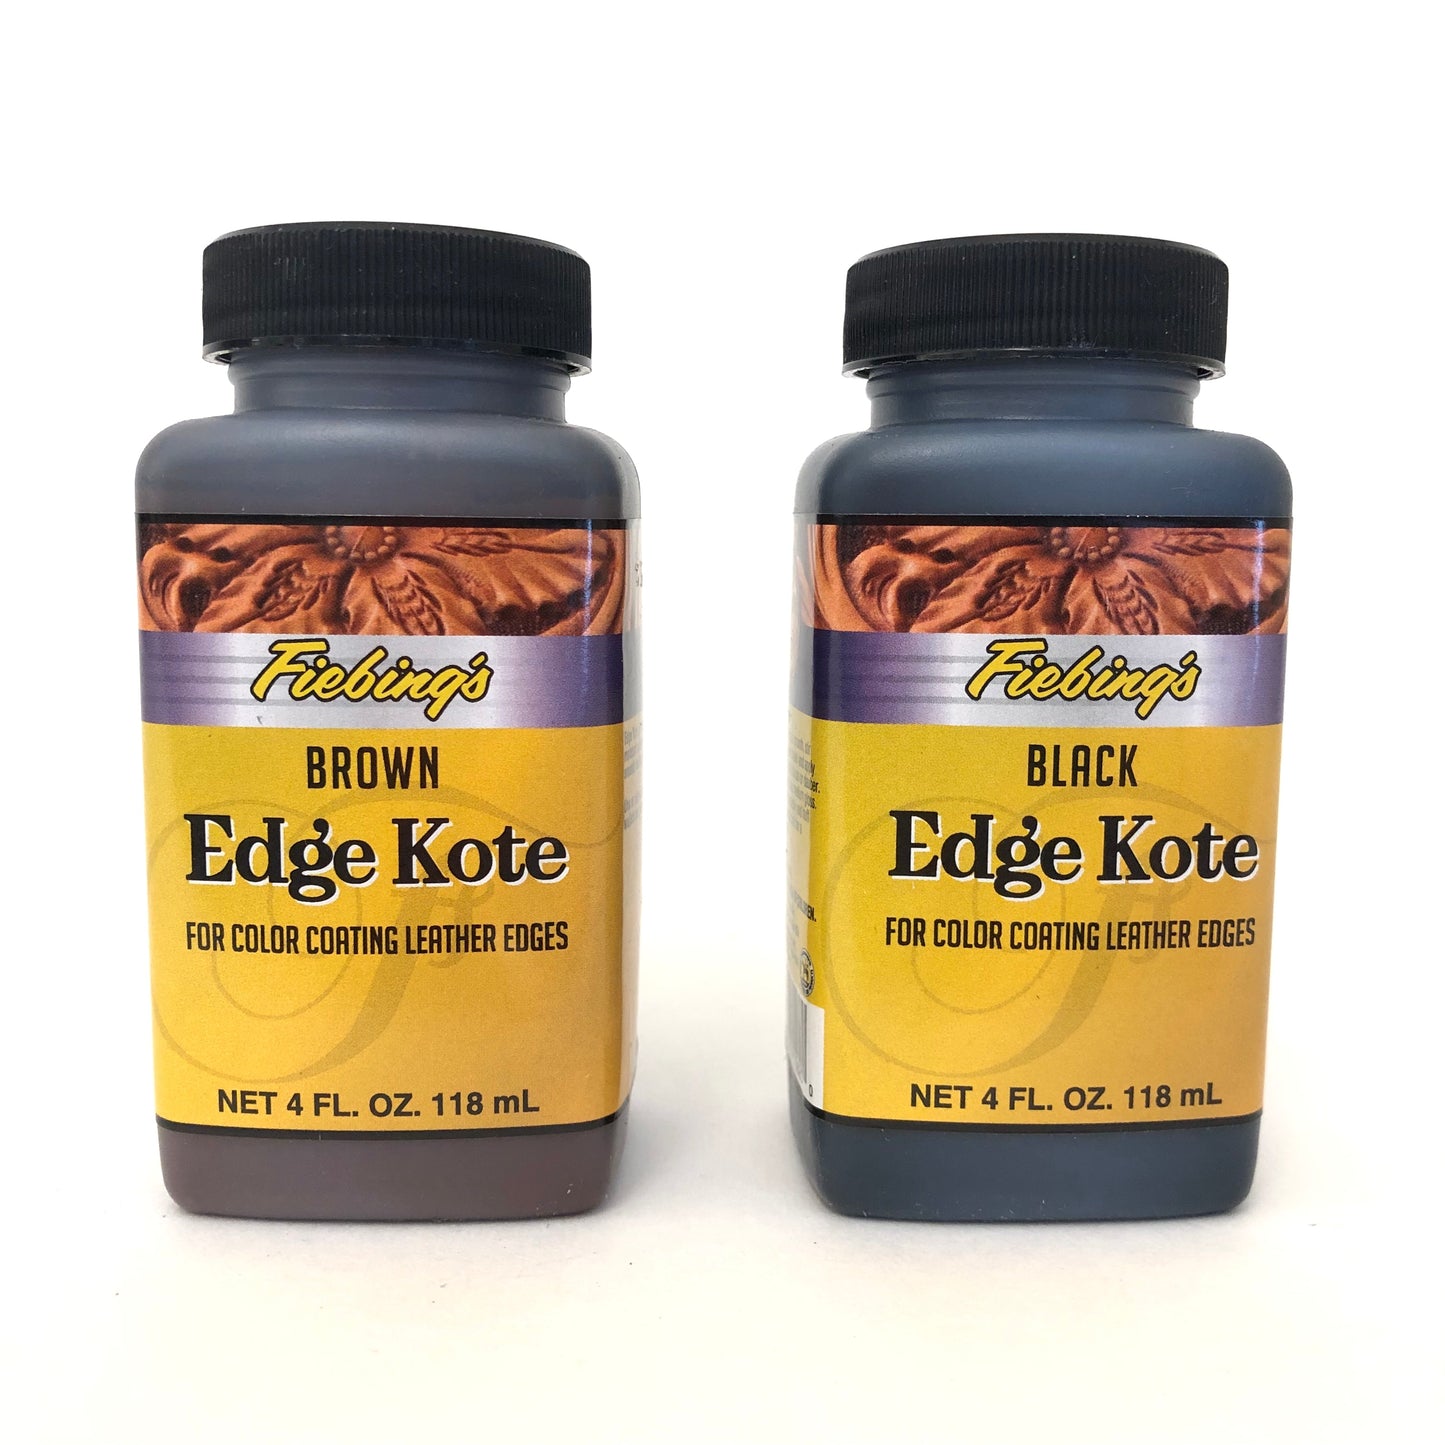 Fiebing's: Edge Kote - Dye